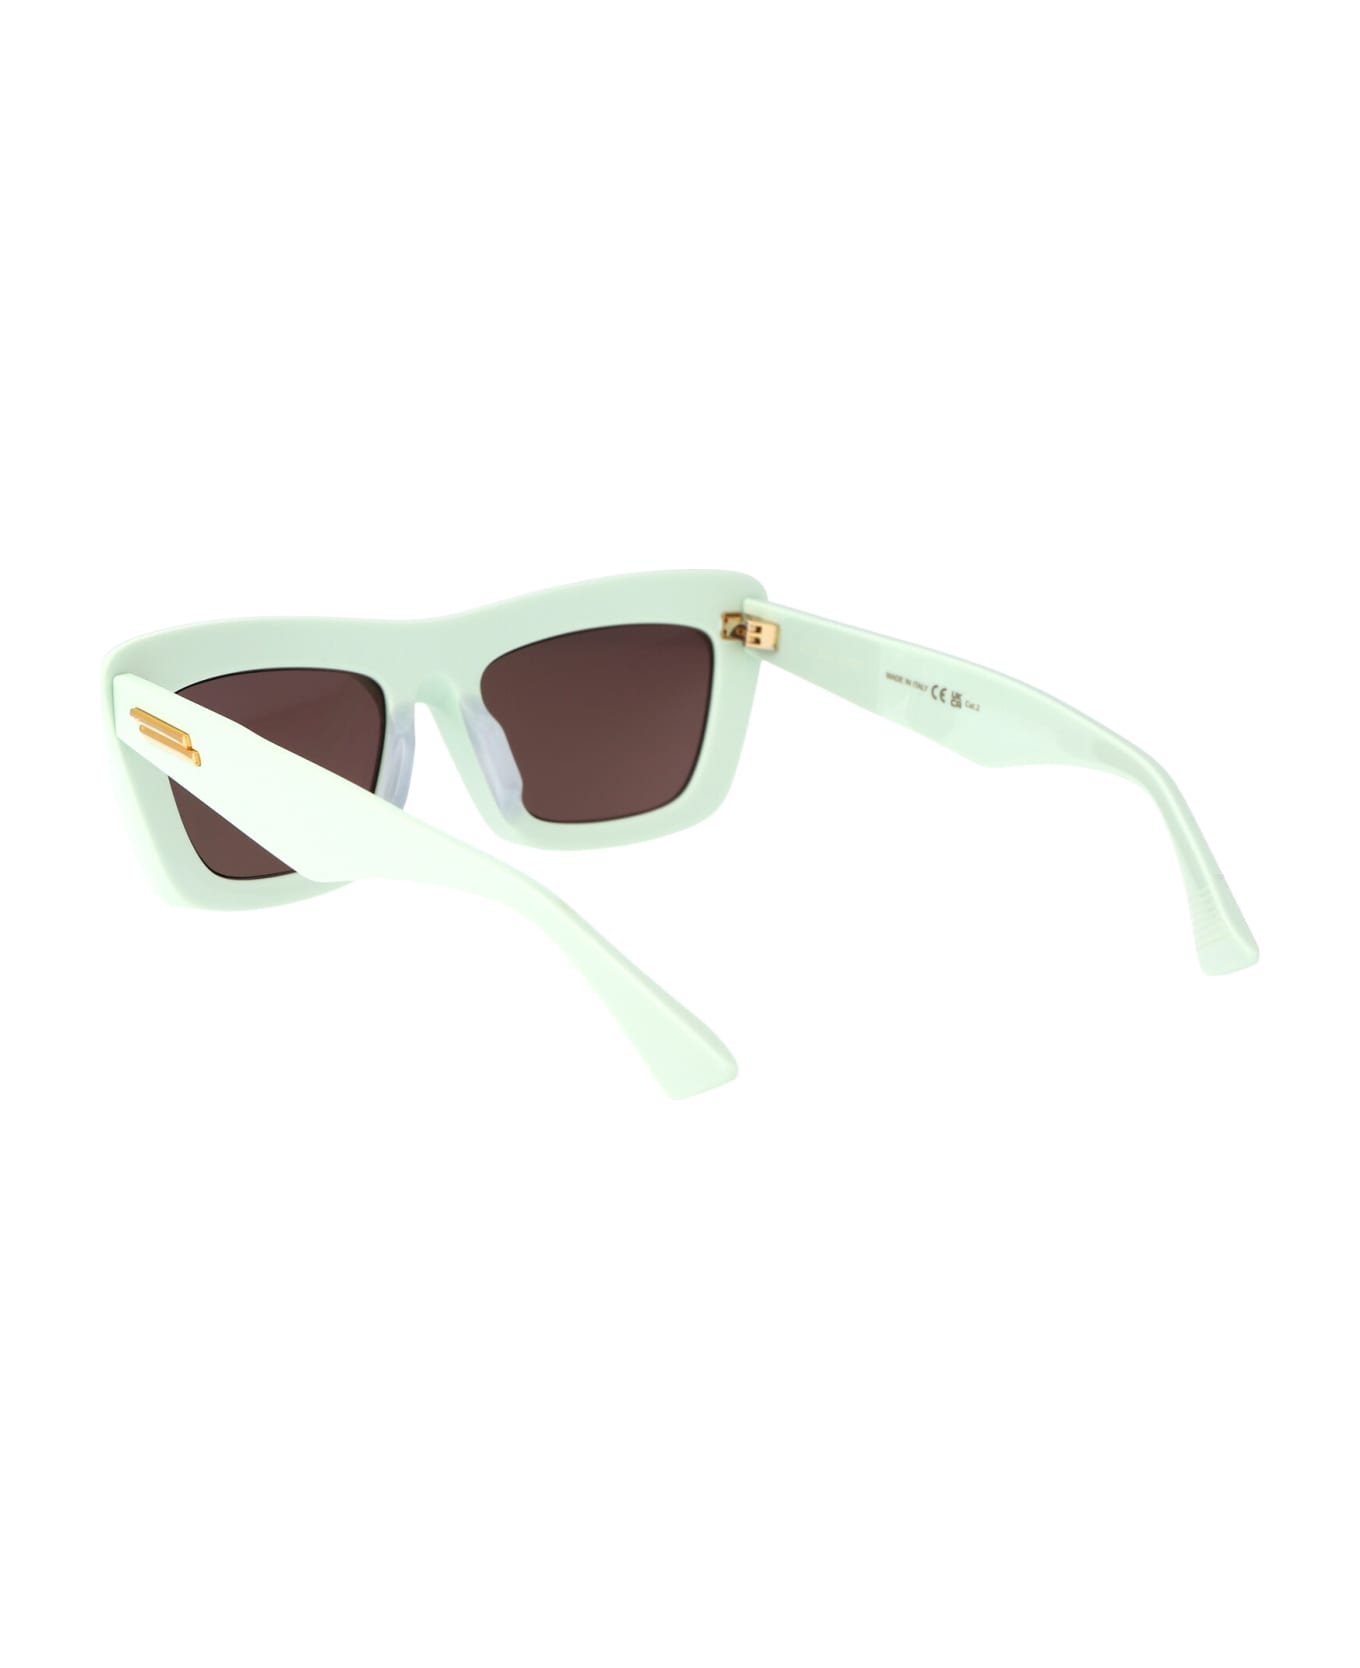 Bottega Veneta Eyewear Bv1283s Sunglasses - 004 GREEN GREEN BROWN